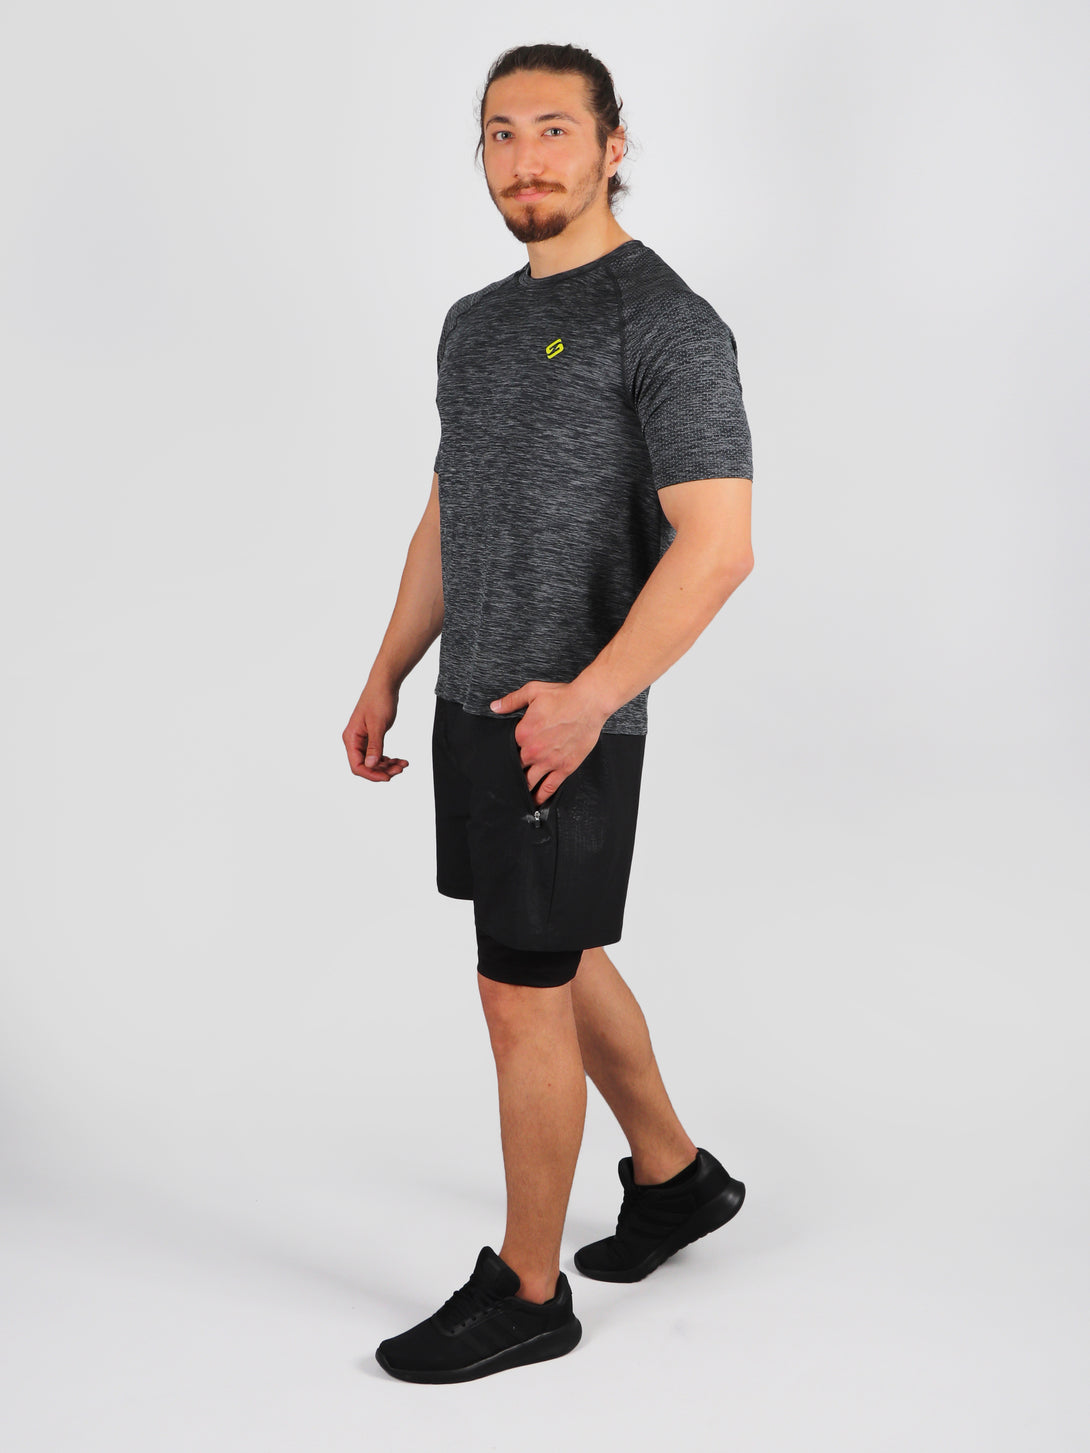 A Man Wearing Black Color Seamless Workout Comfort T-Shirt